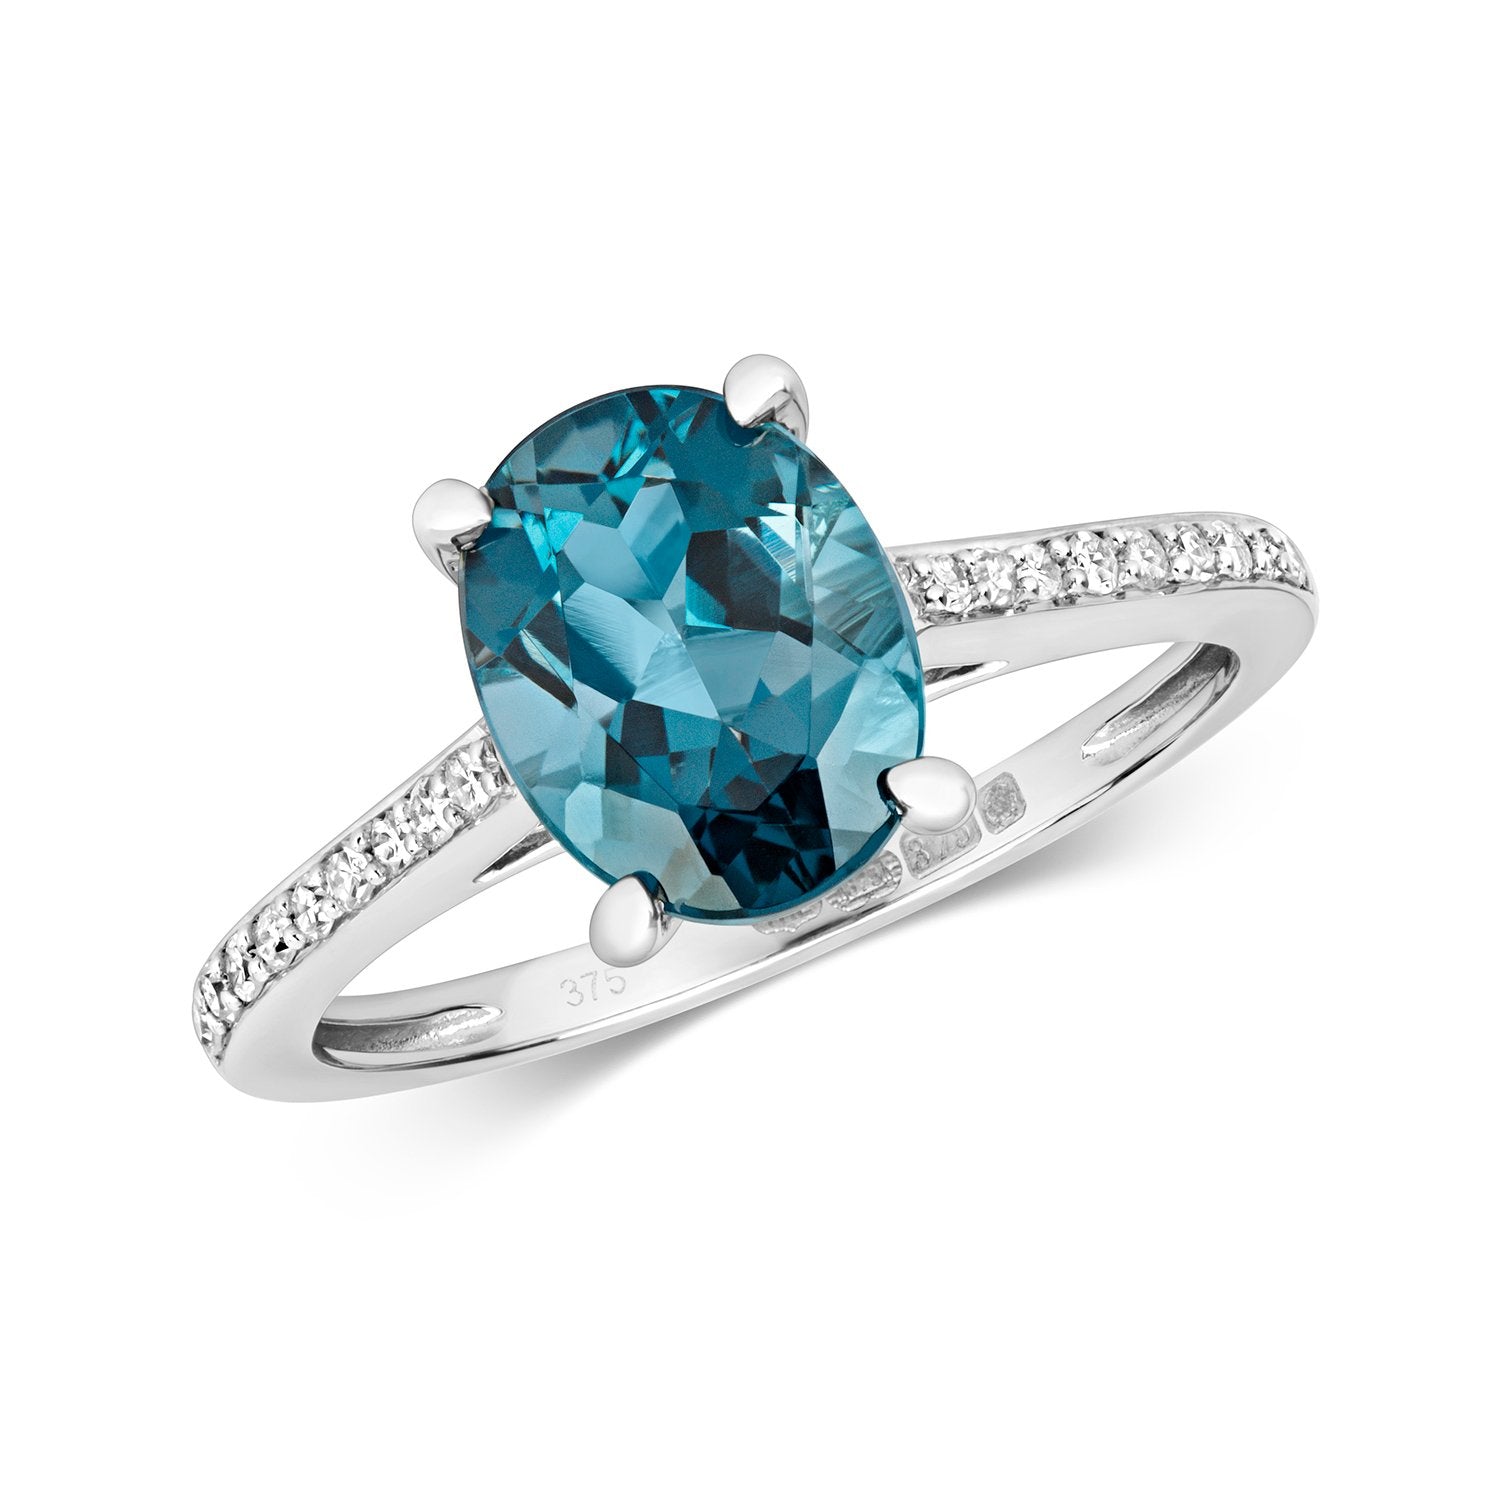 Oval London Blue Topaz & Diamond Ring (Rd461wlb)